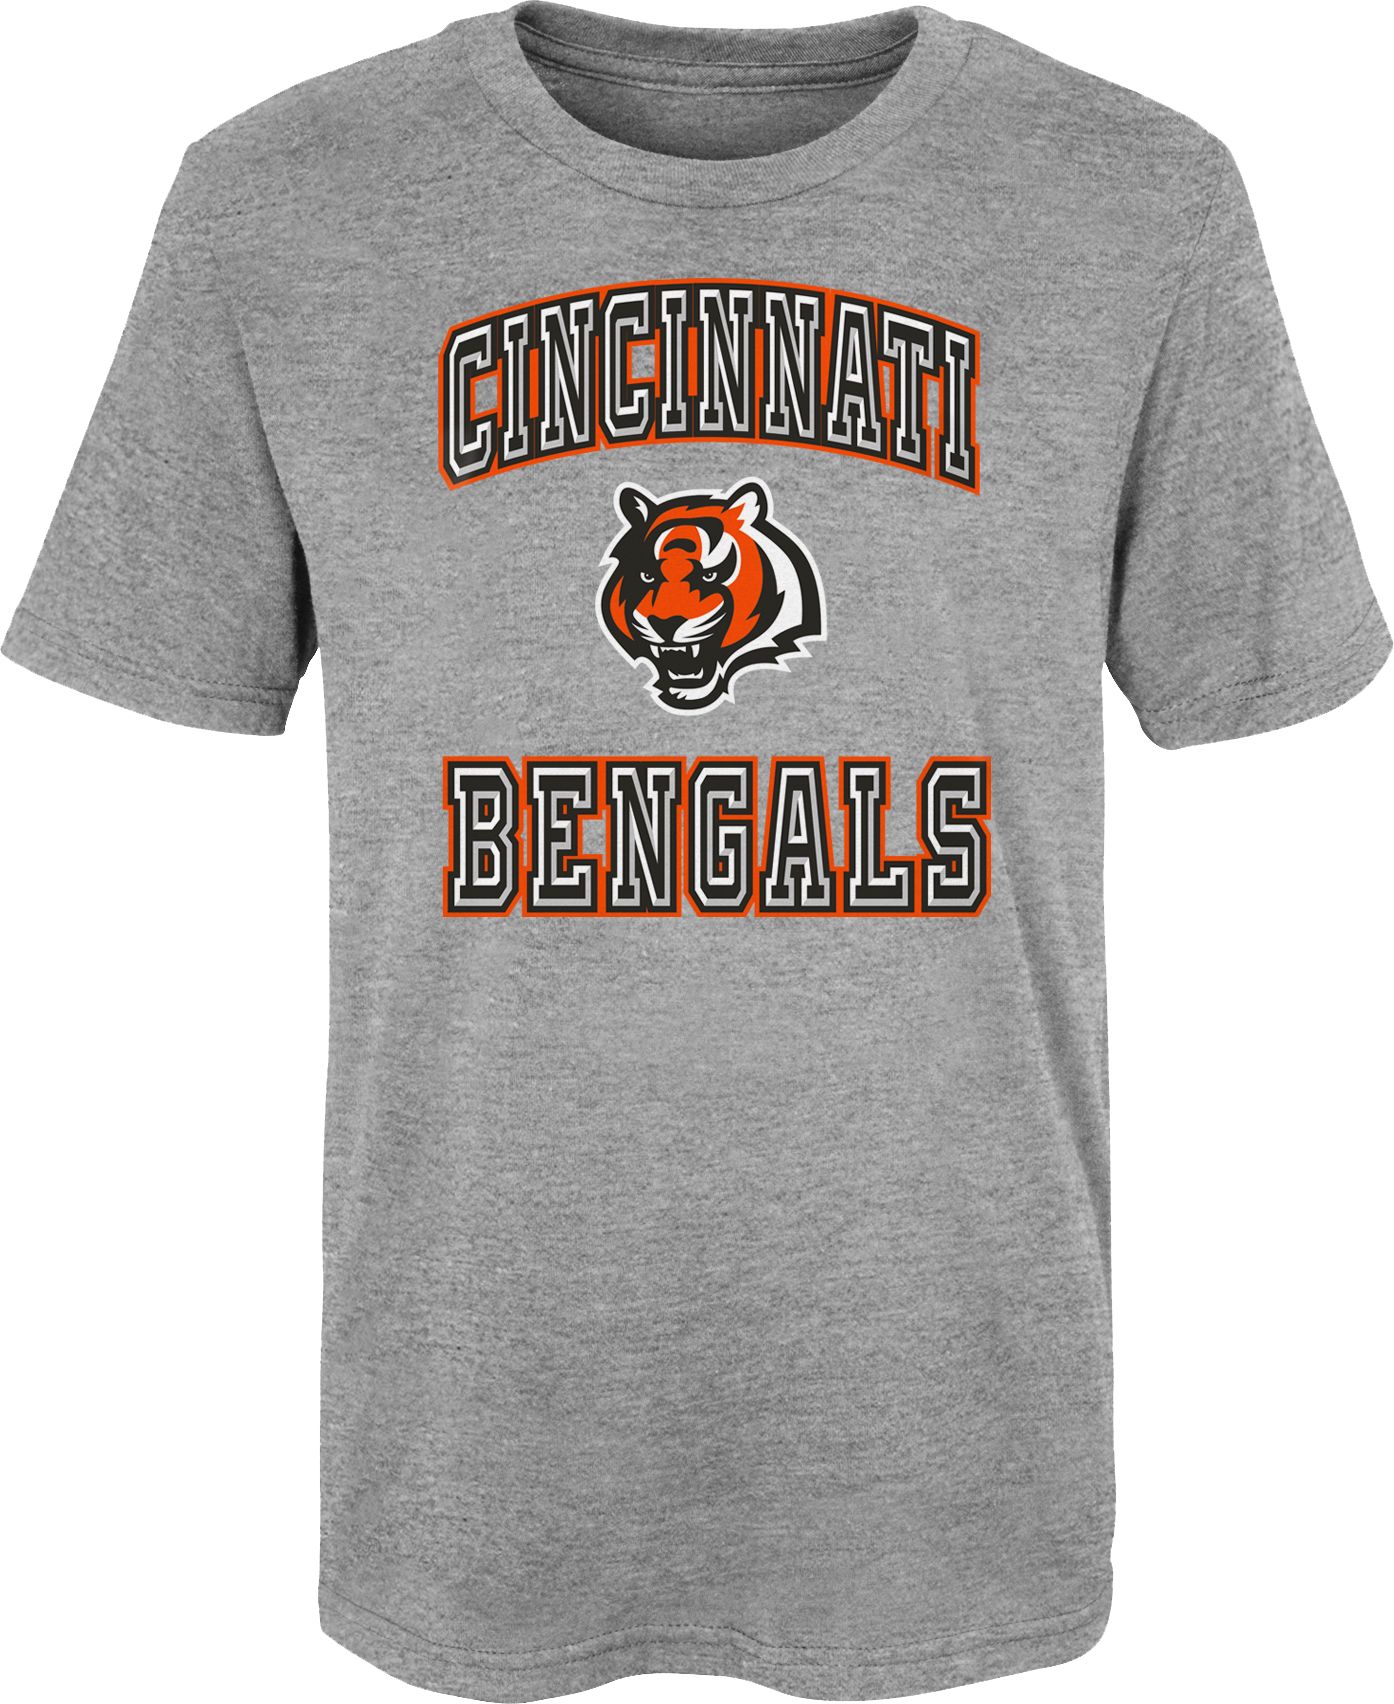 Cincinnati Bengals kids T shirt